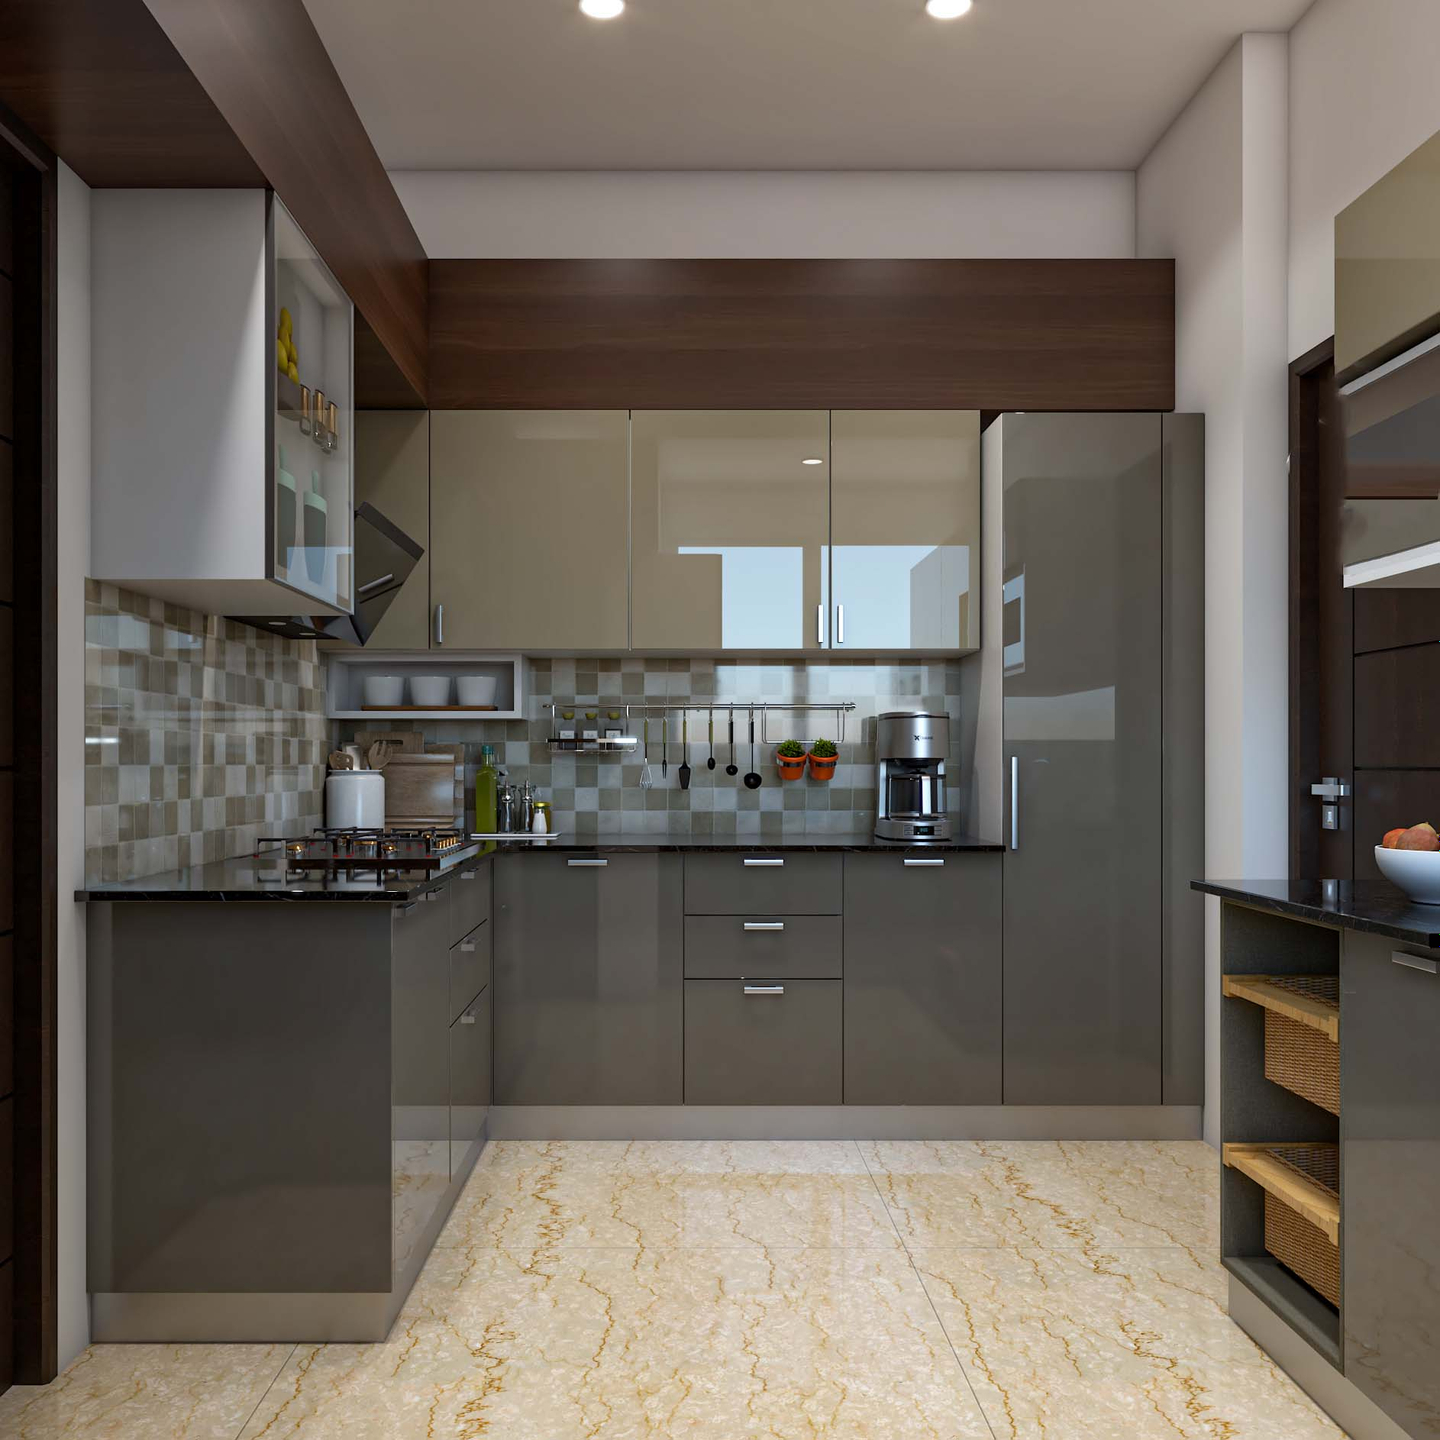 Functional Kitchen Design For Rentals - Livspace